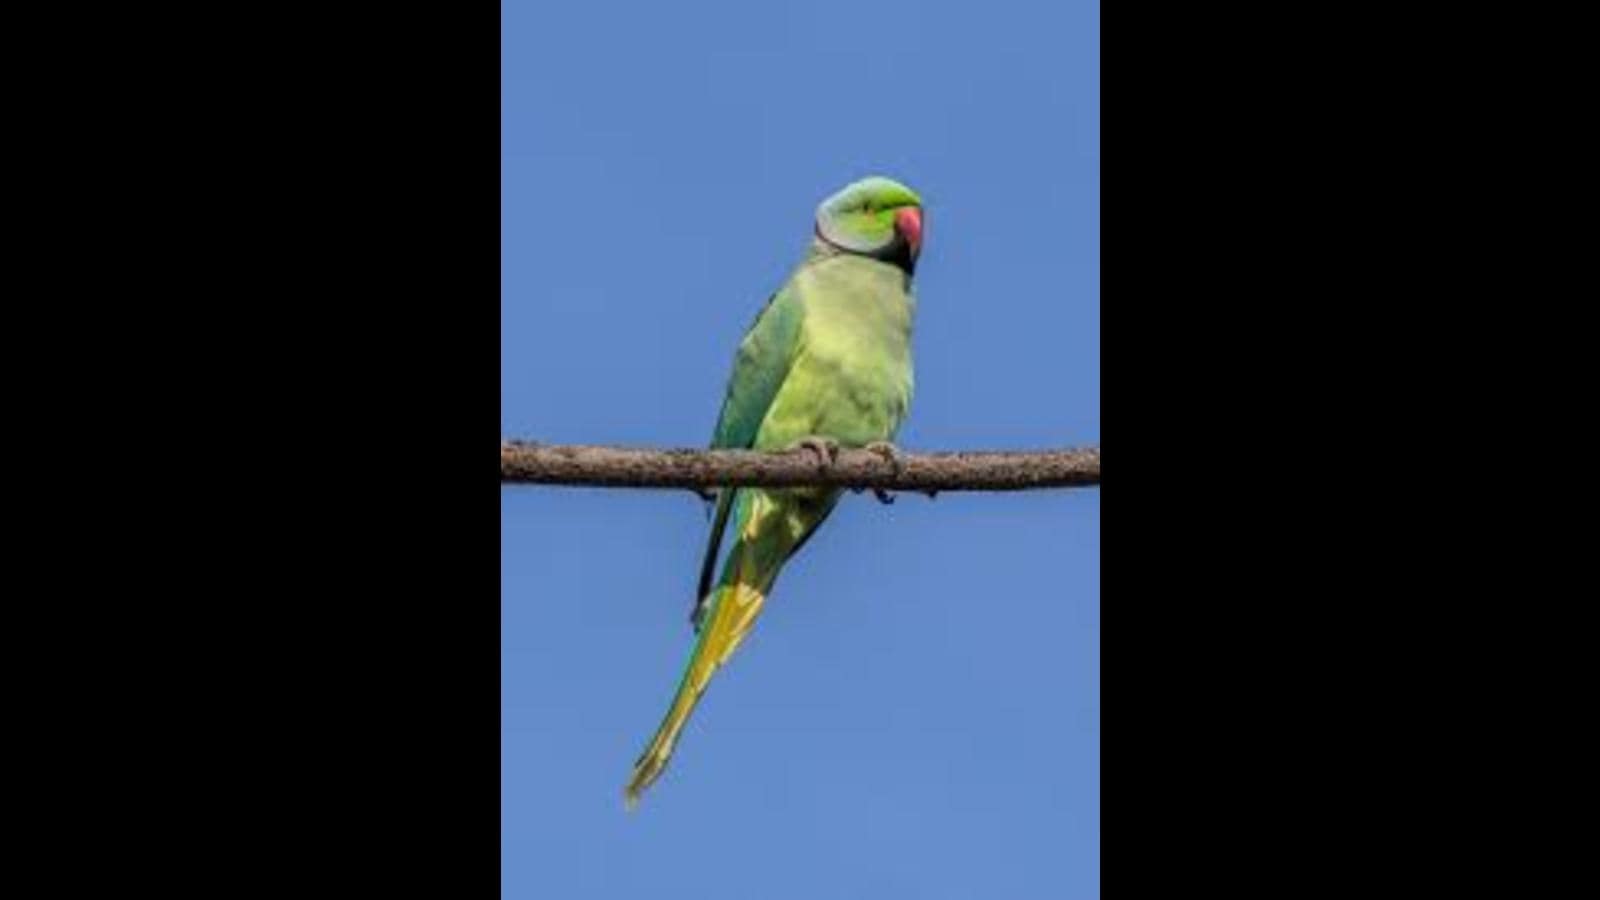 Echo parakeet - Wikipedia